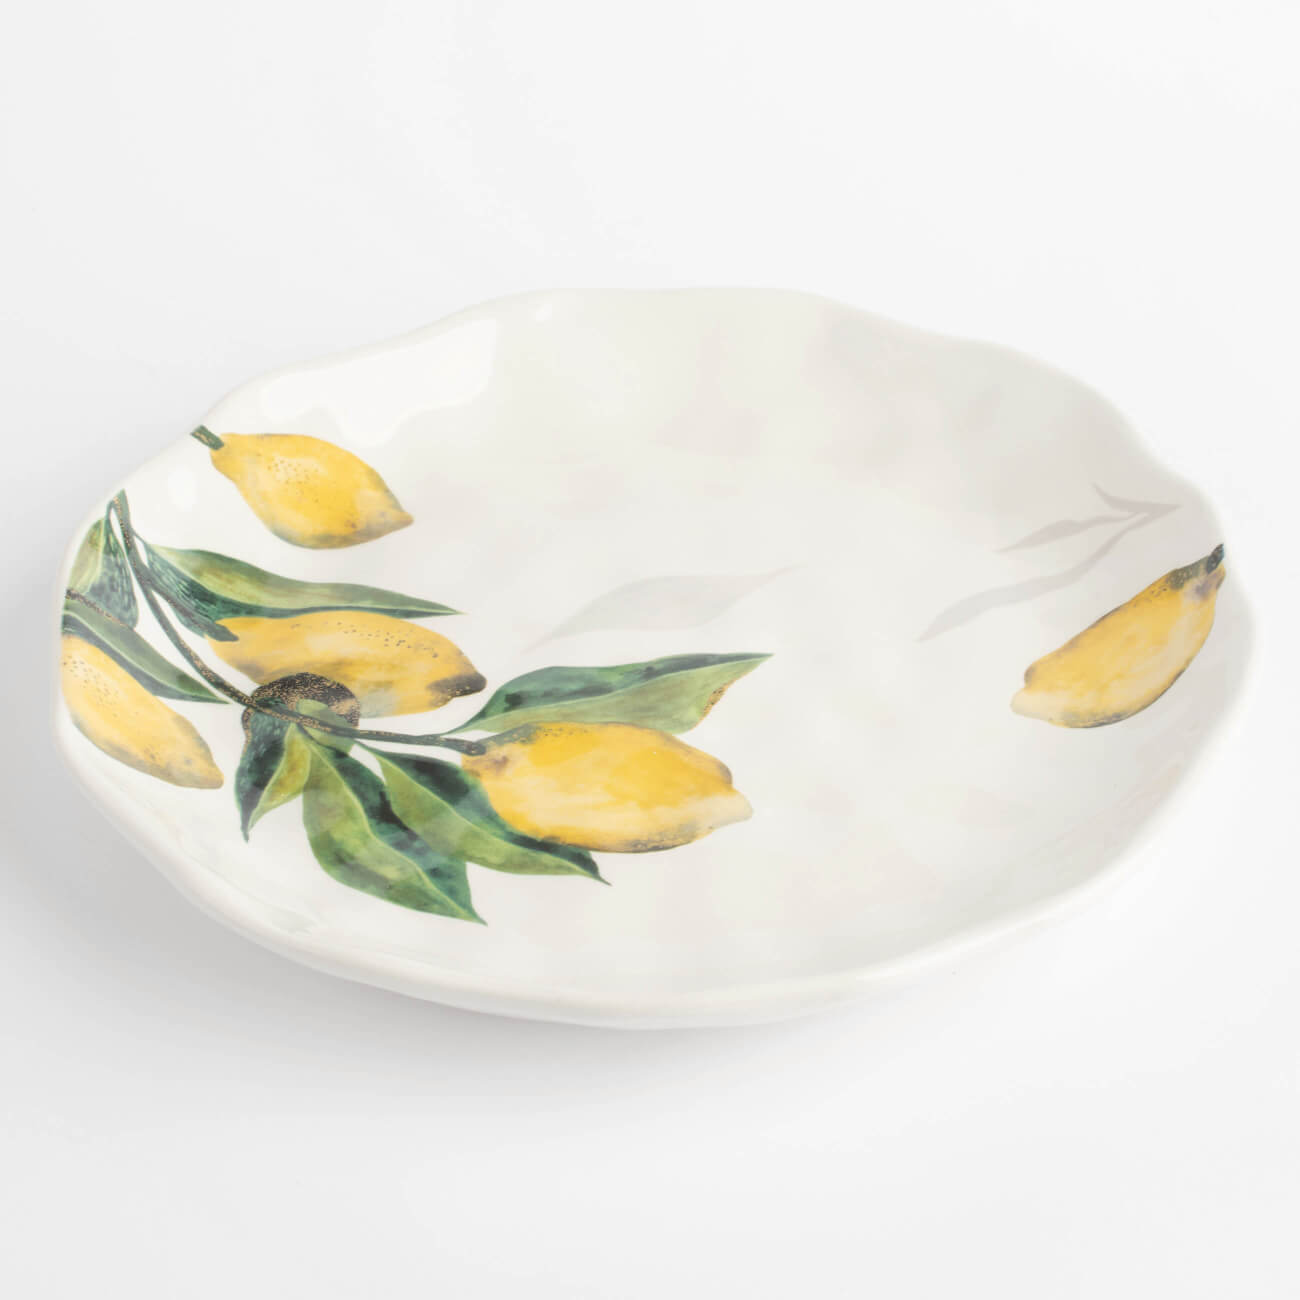 Тарелка закусочная, 23 см, керамика, белая, Лимоны на ветке, Sicily in bloom кружка 320 мл керамика белая лимоны на ветке sicily in bloom